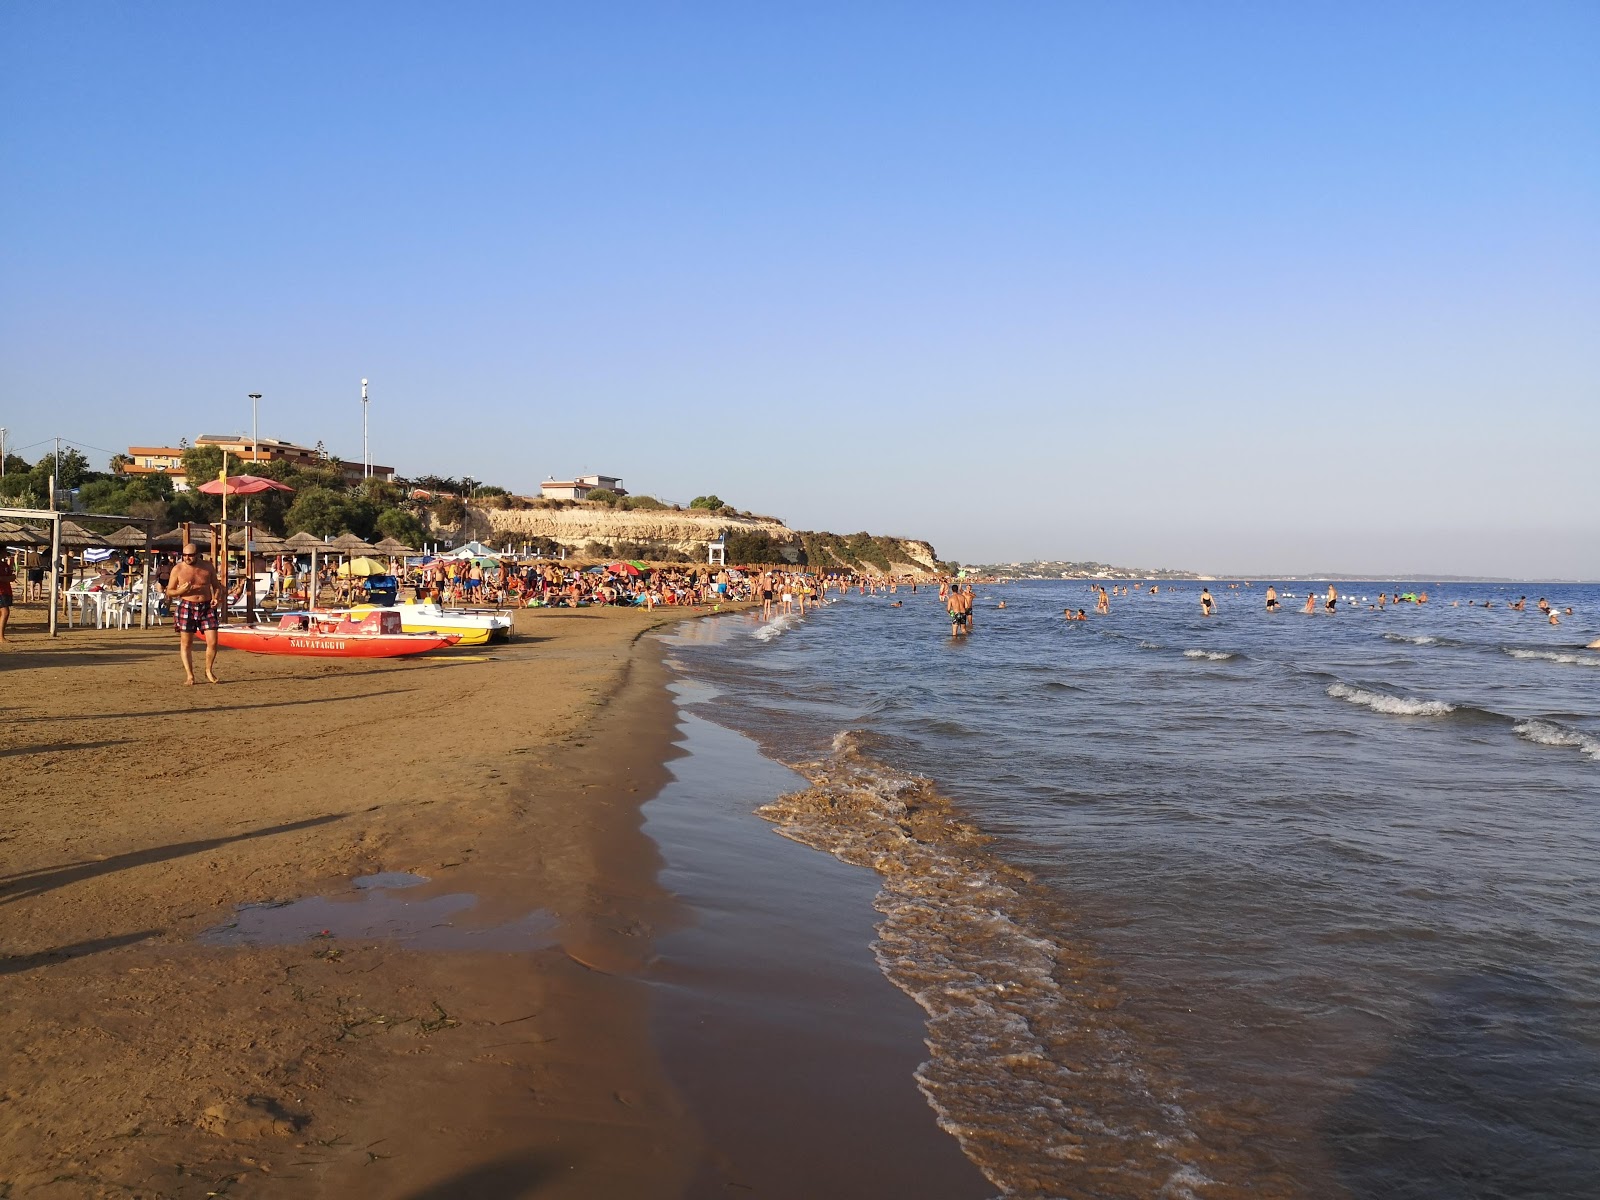 Spiaggia Pietre Nere'in fotoğrafı plaj tatil beldesi alanı